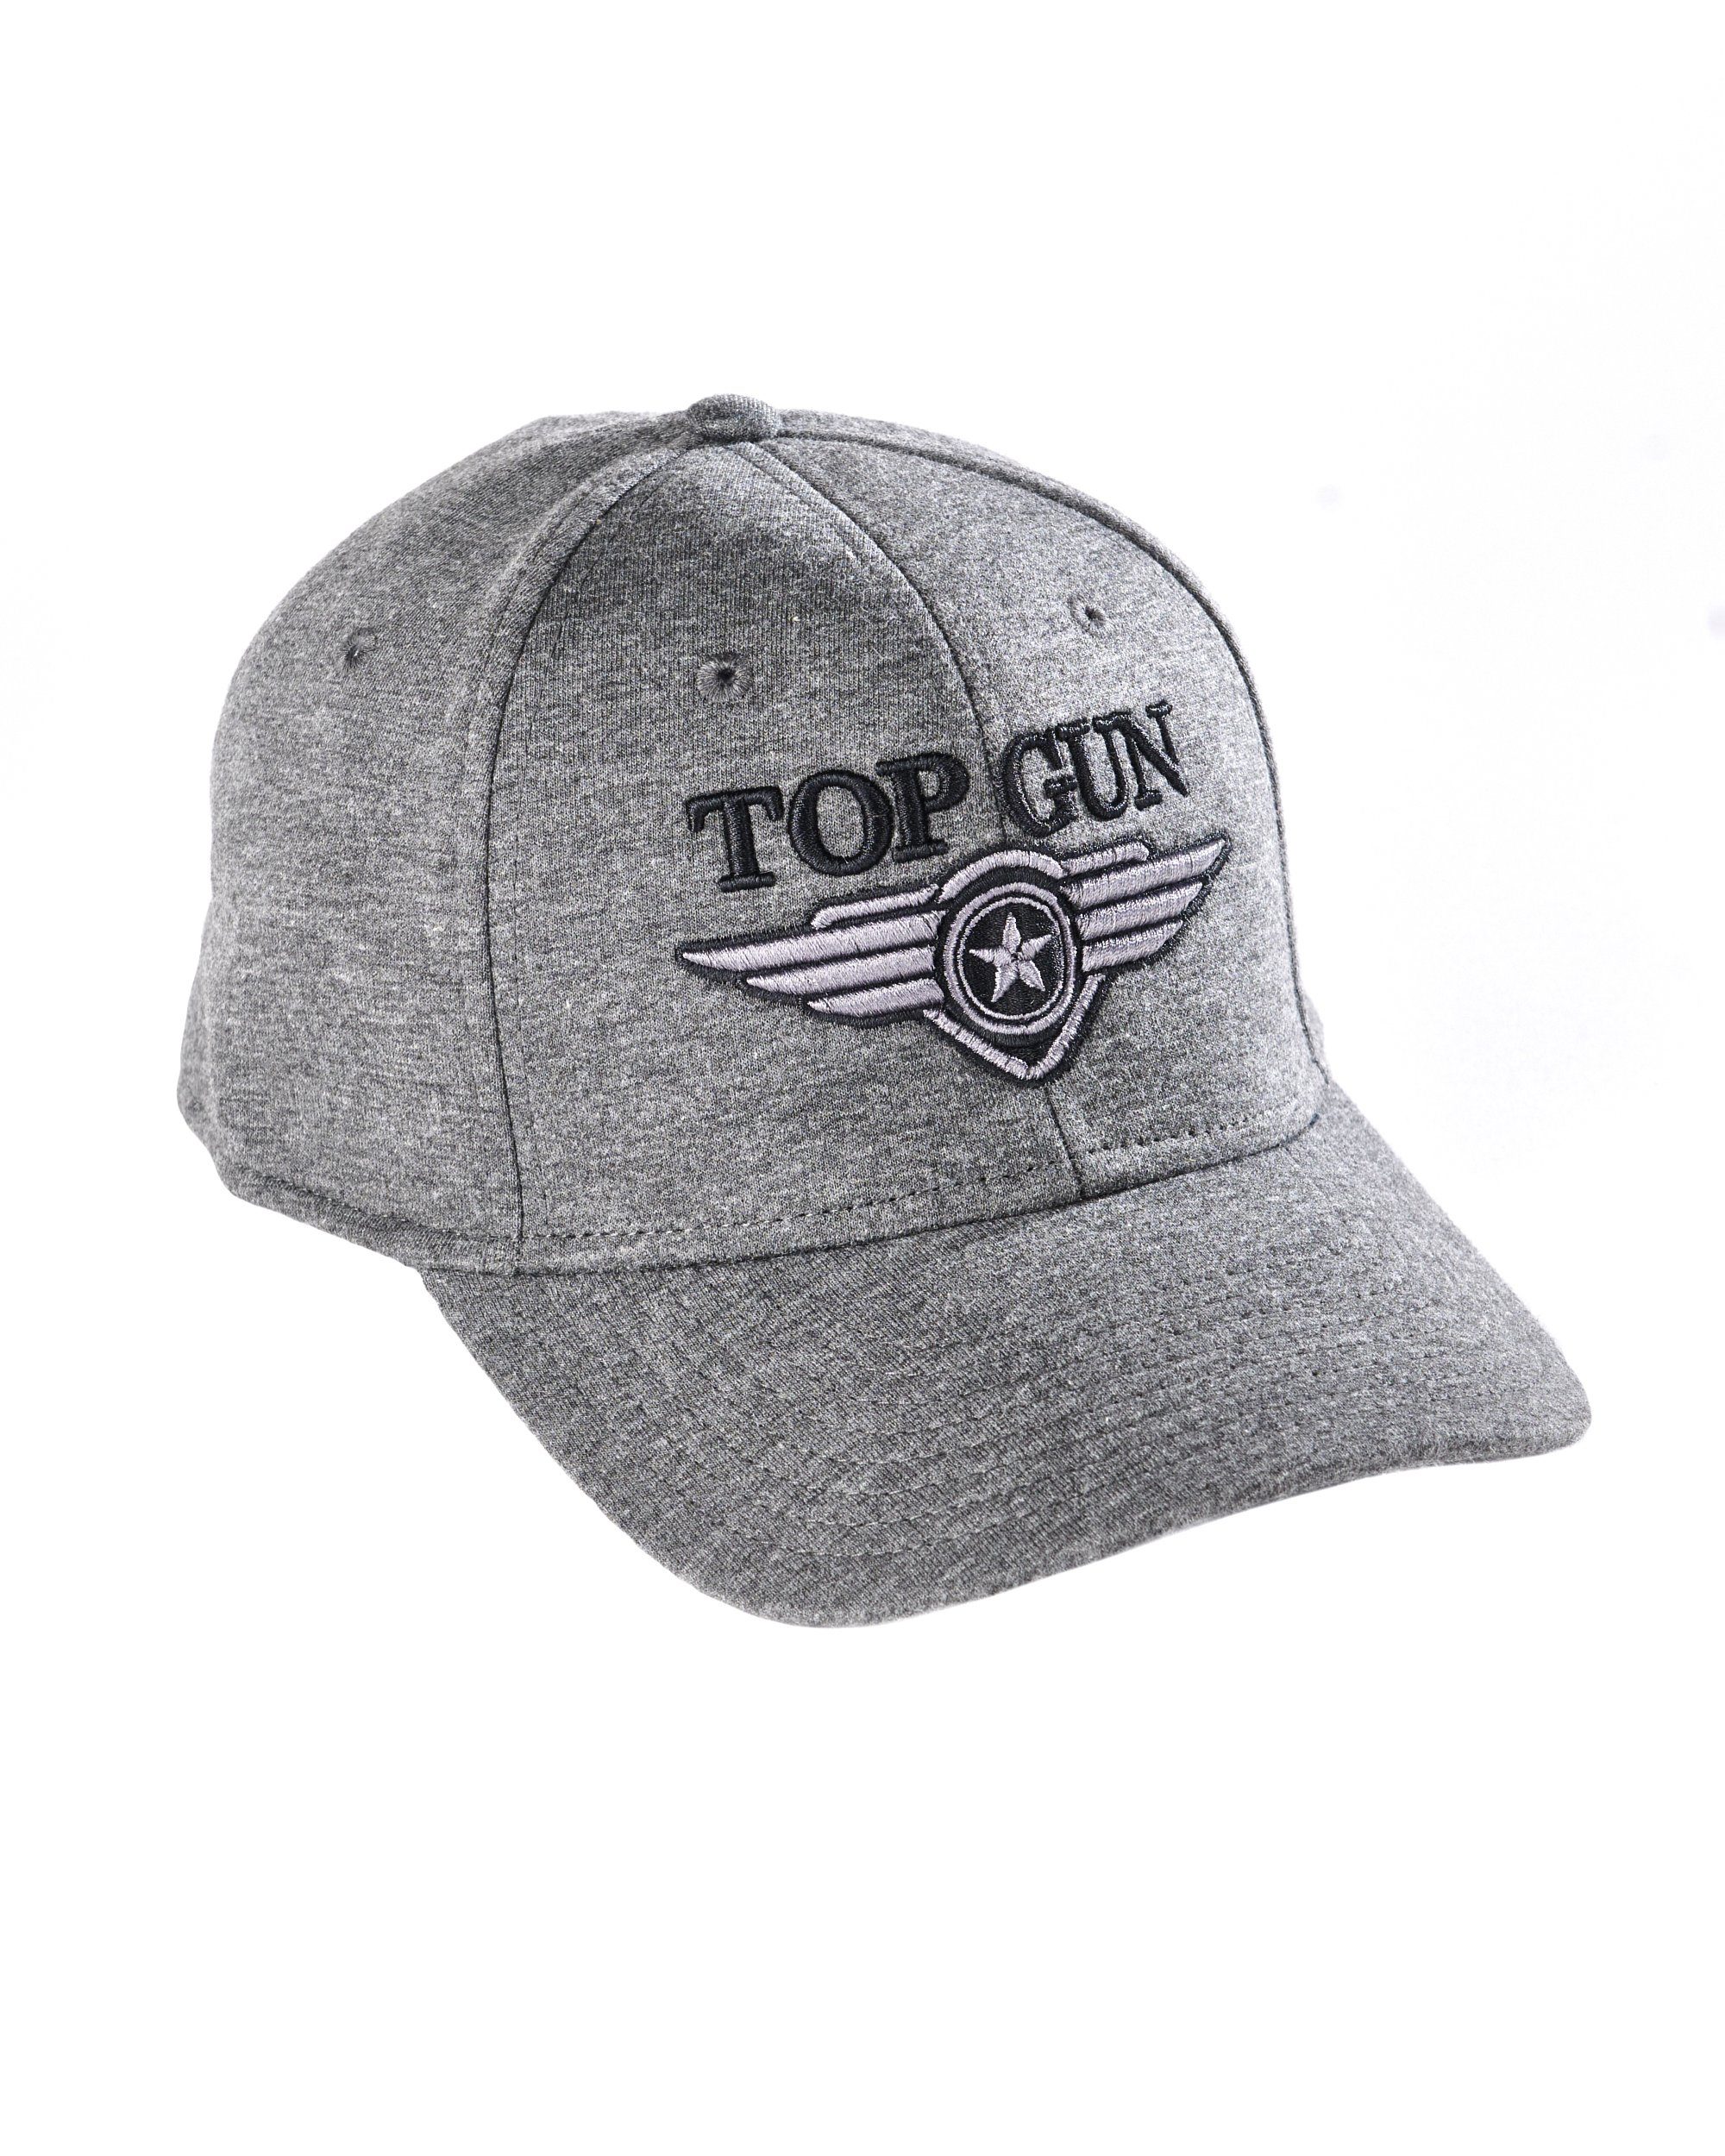 unvergesslich TOP GUN Snapback Snapback TG20193167 black Cap